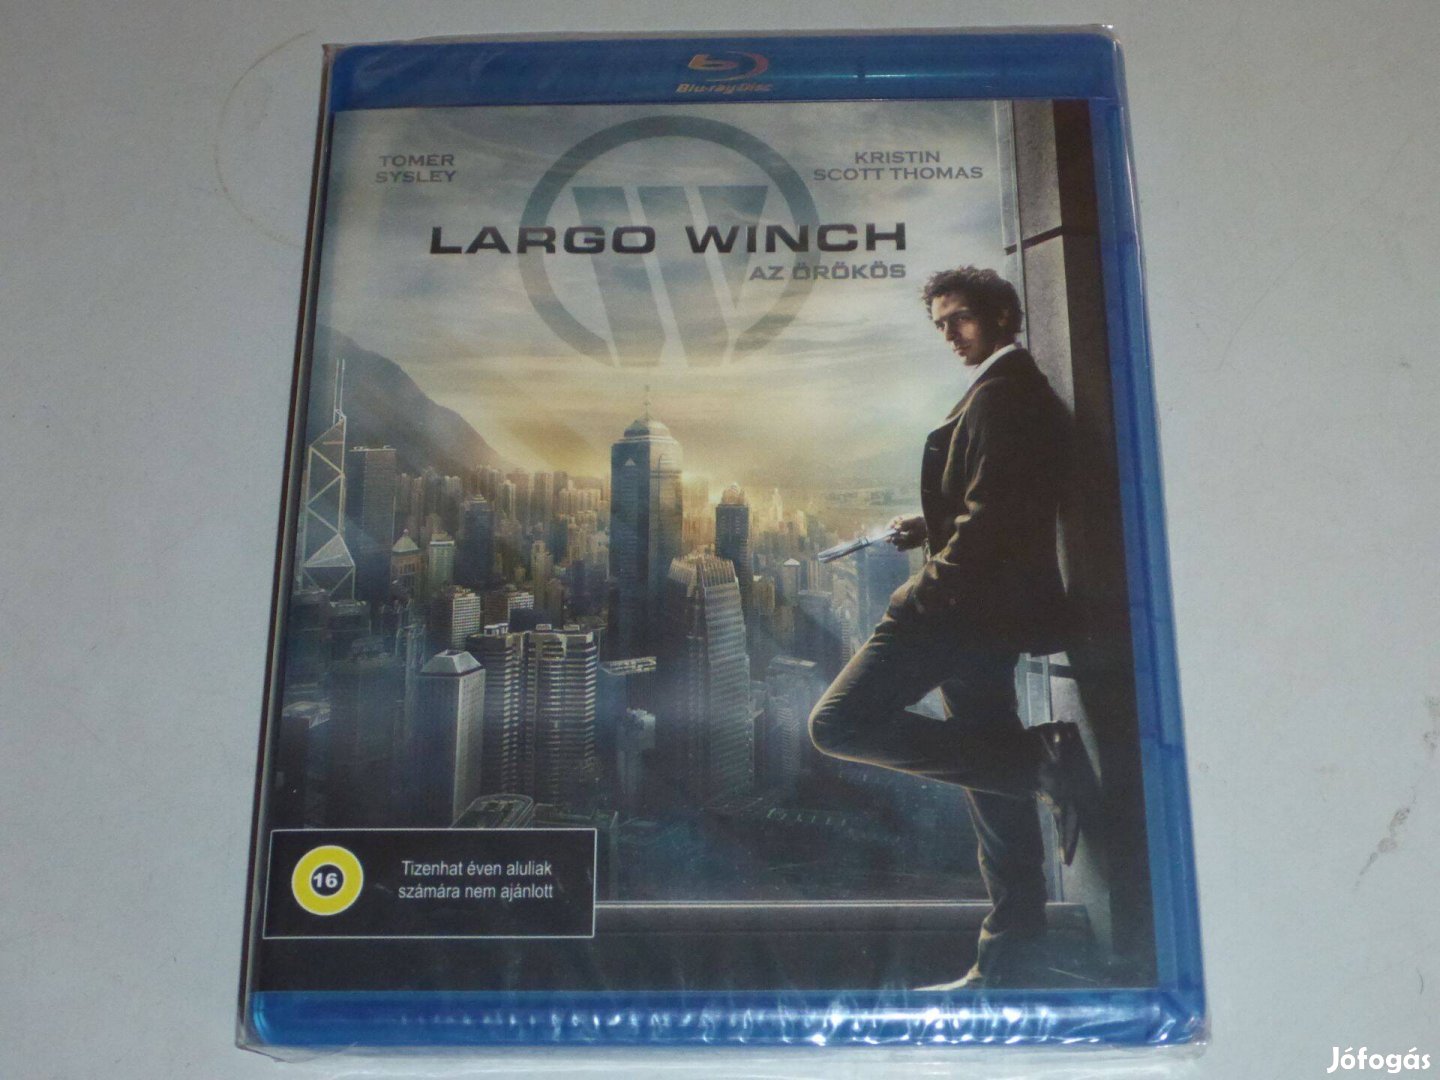 Largo Winch blu-ray film